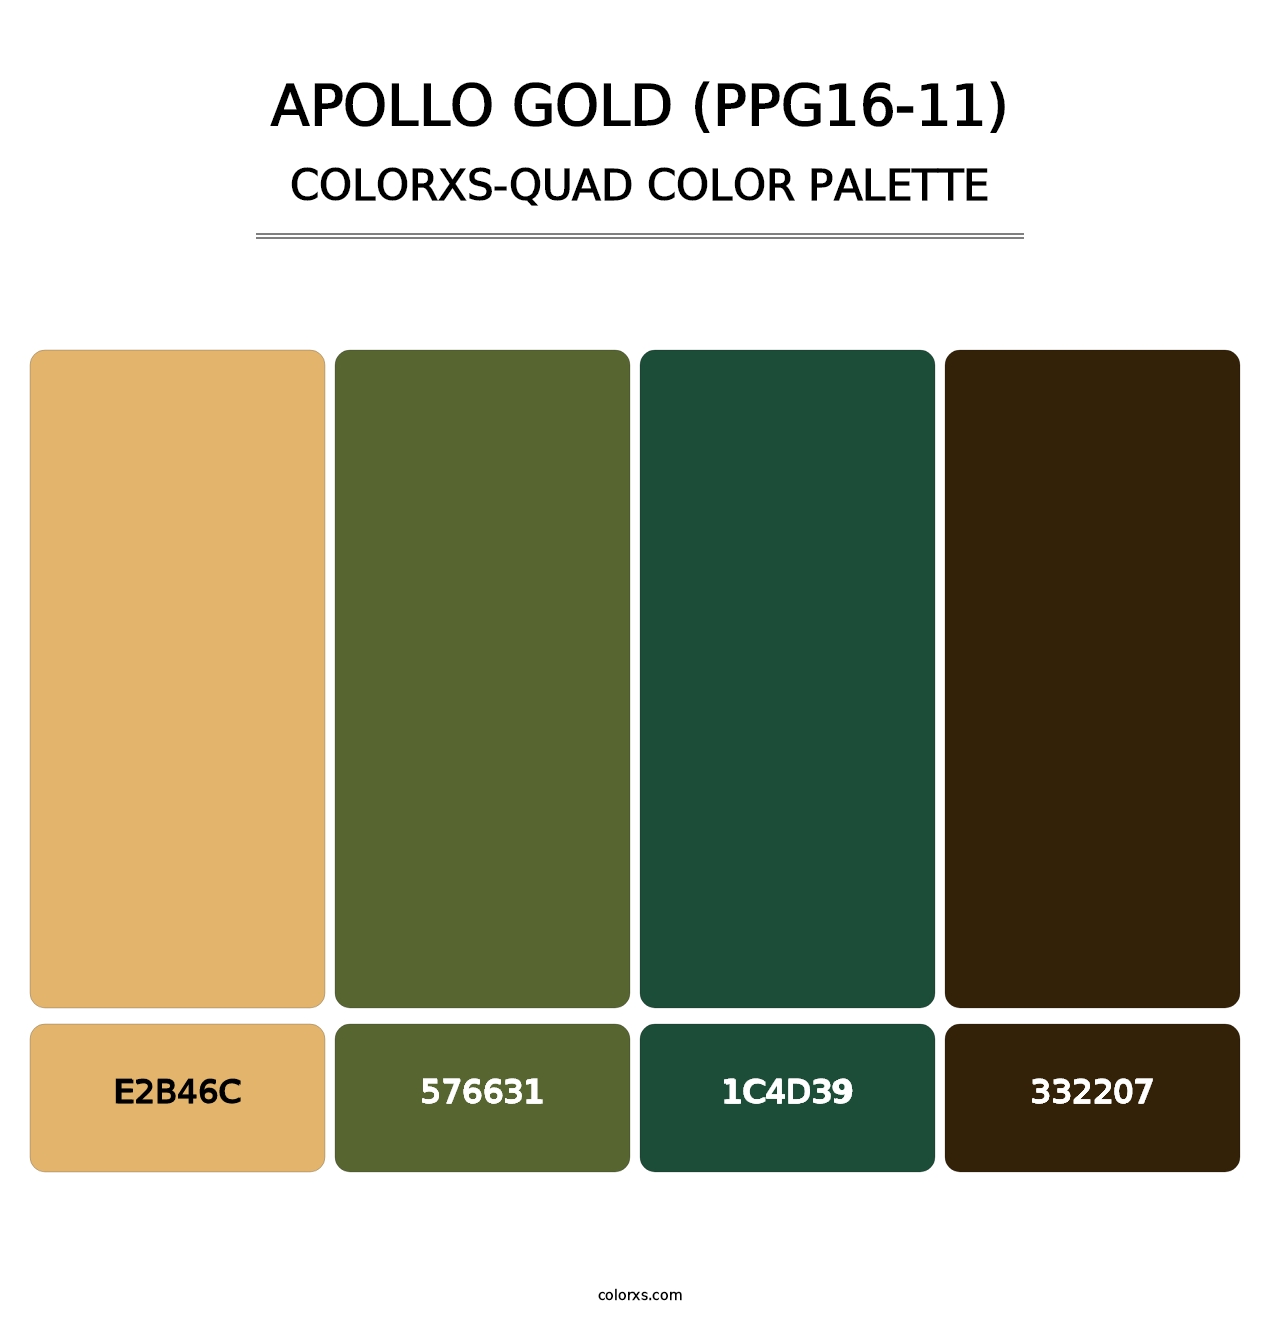 Apollo Gold (PPG16-11) - Colorxs Quad Palette